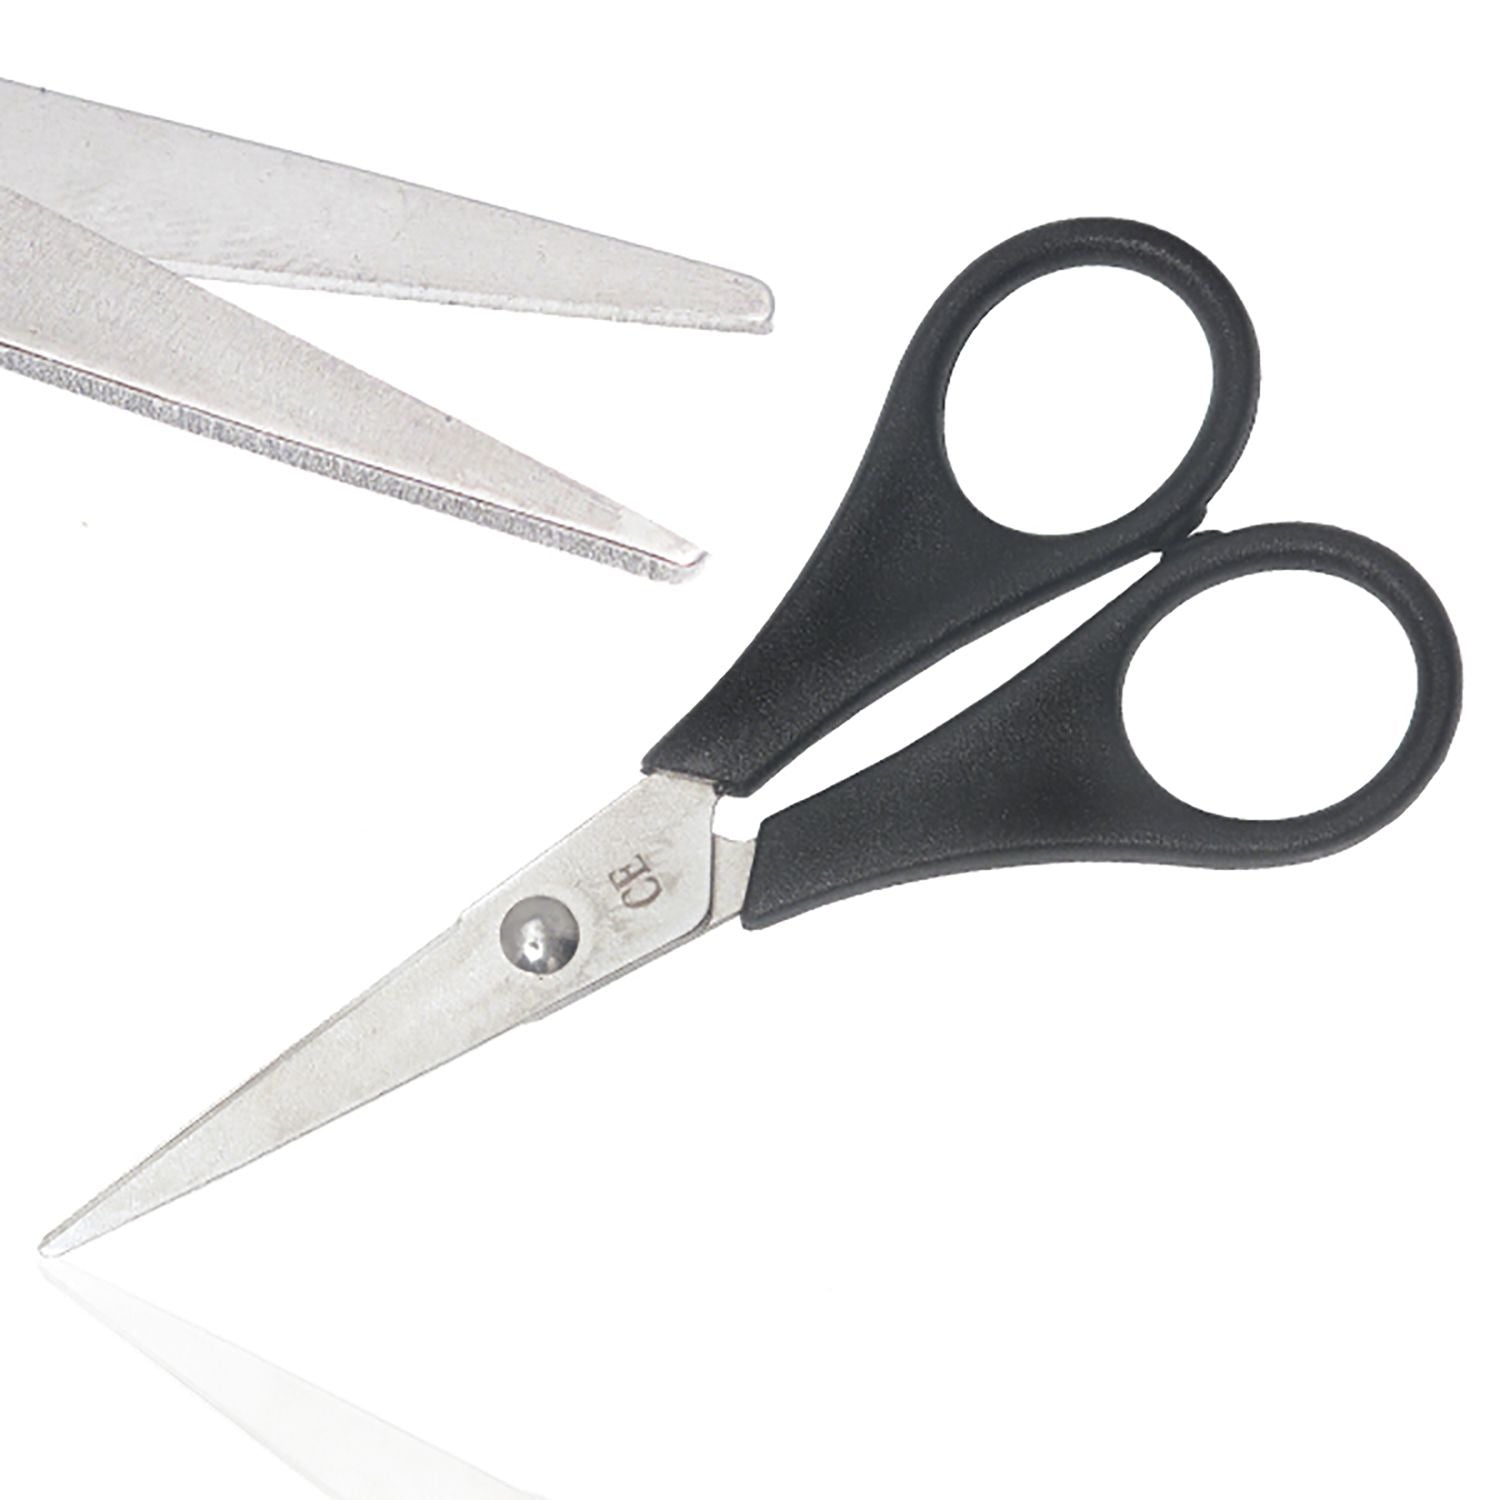 Instramed Disposable Scissors | Sharp/Sharp | 11.5cm | Plastic Handle | Single